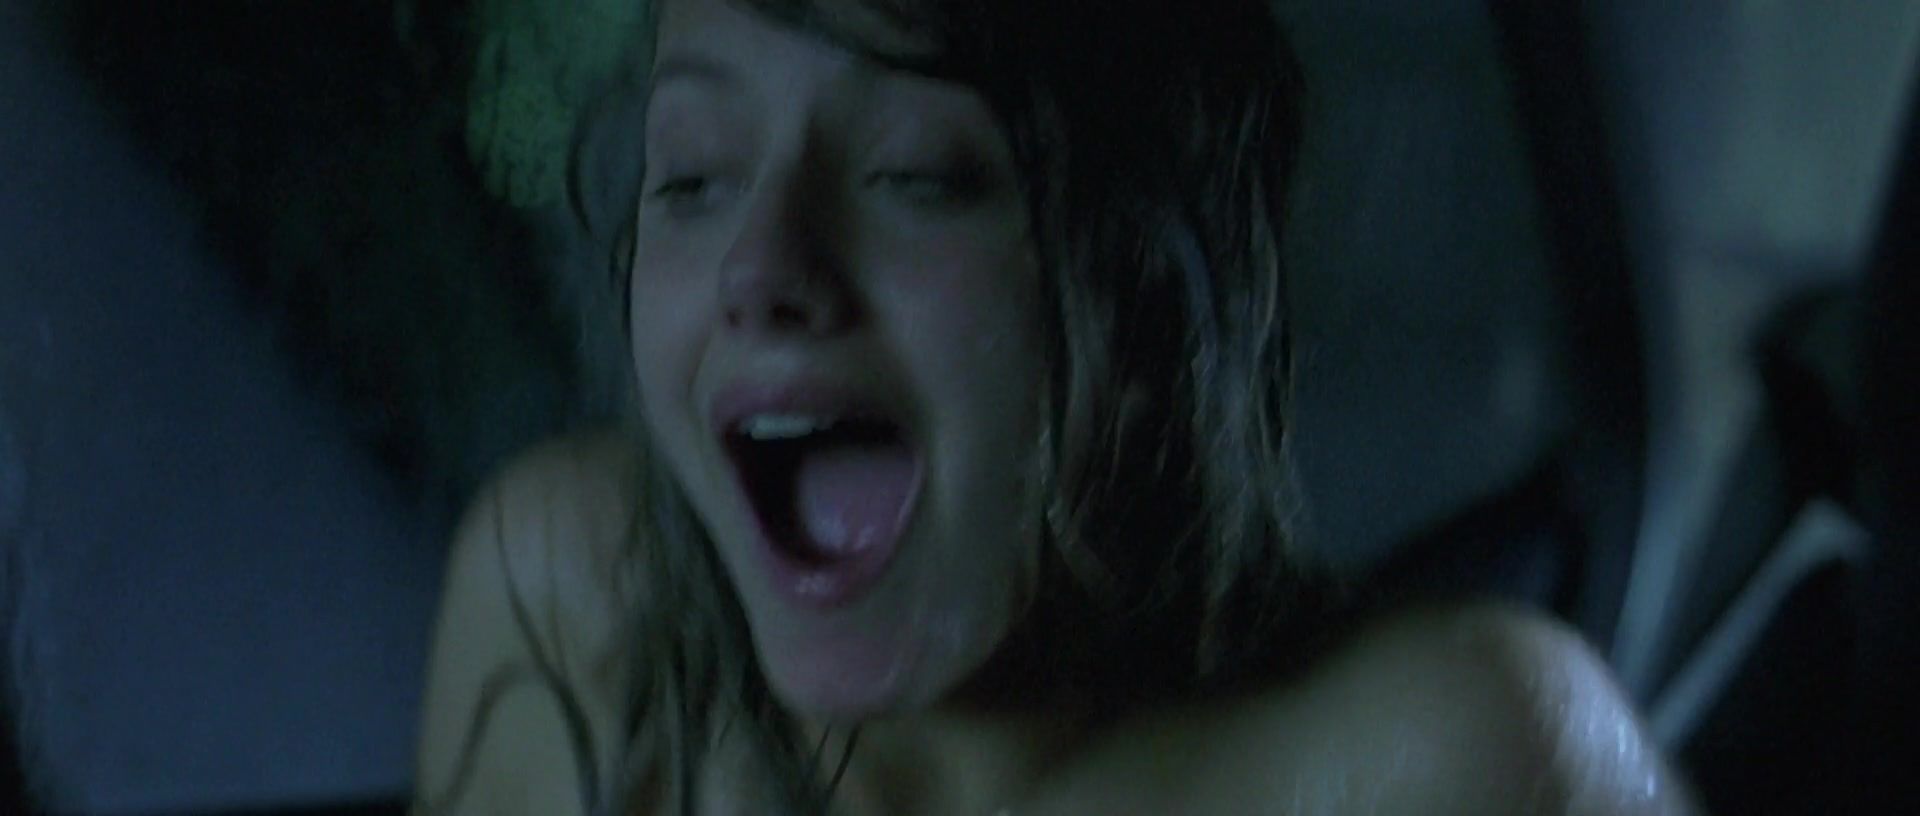 Asa Akira Naked Melanie Laurent from French movie "Je vais bien, ne t'en fais pas" | Released in 2006 Friend